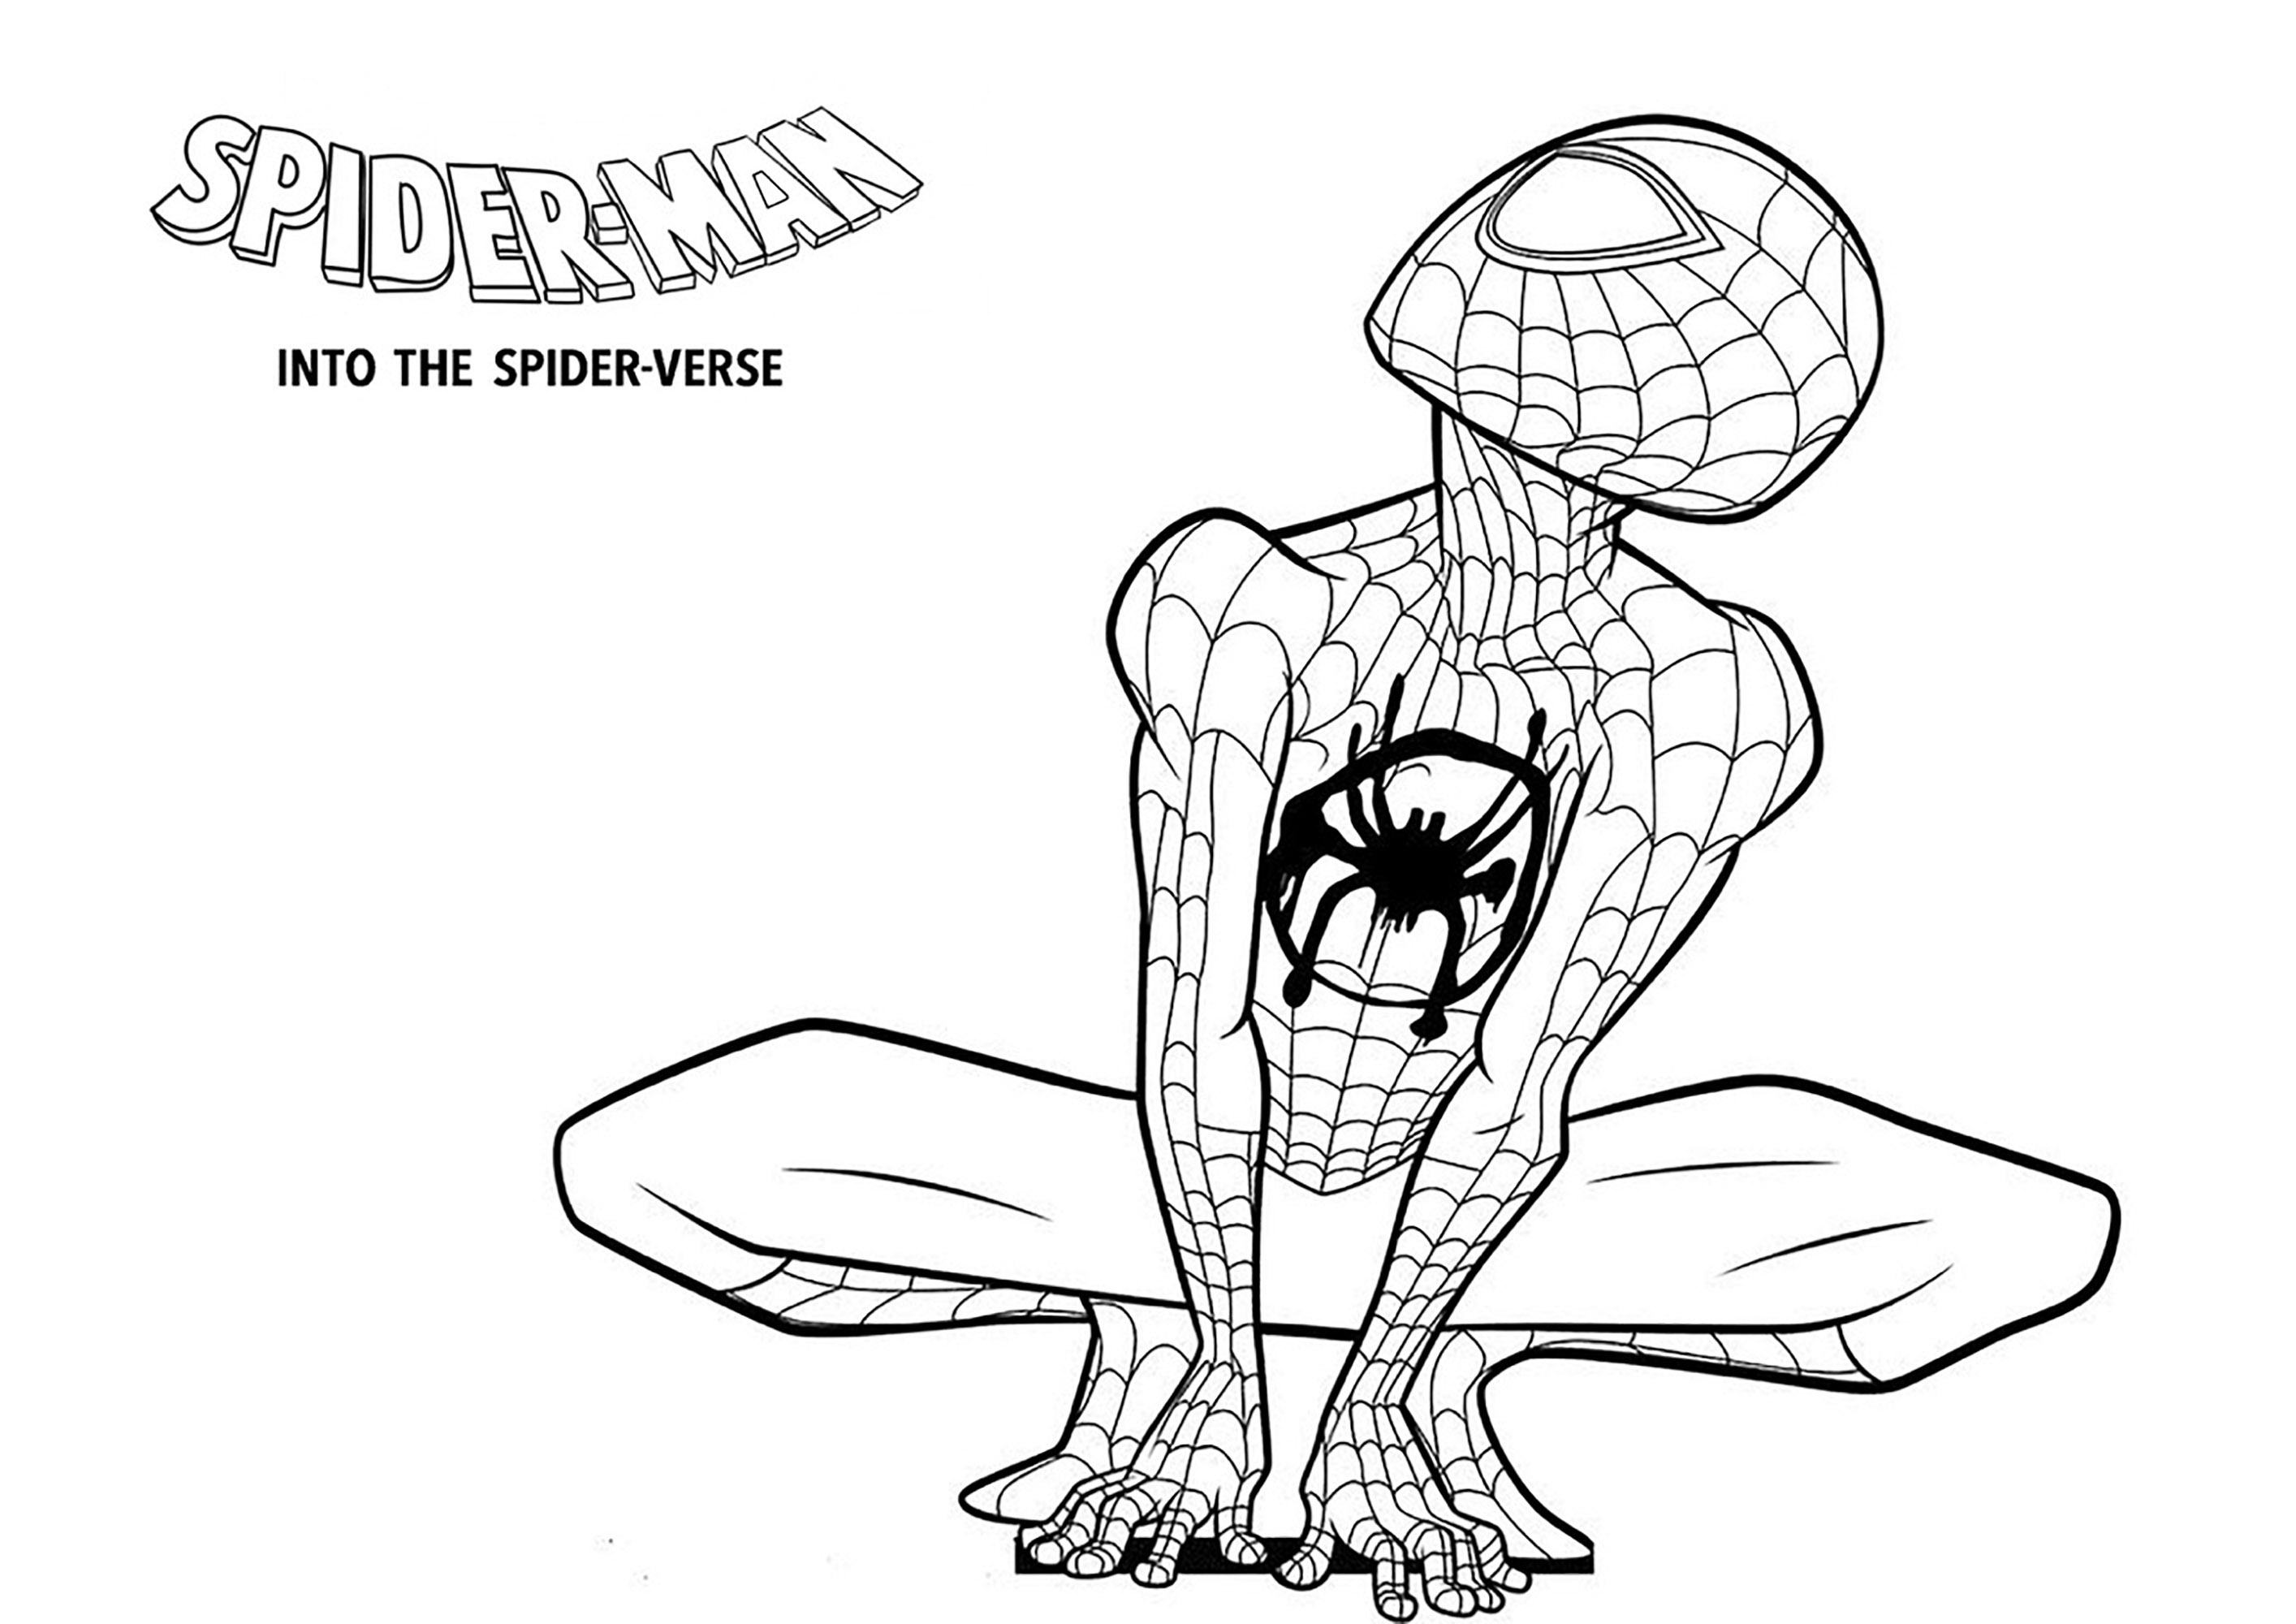 Spider man into the spiederverse avec logo - Image avec : Mike Morales